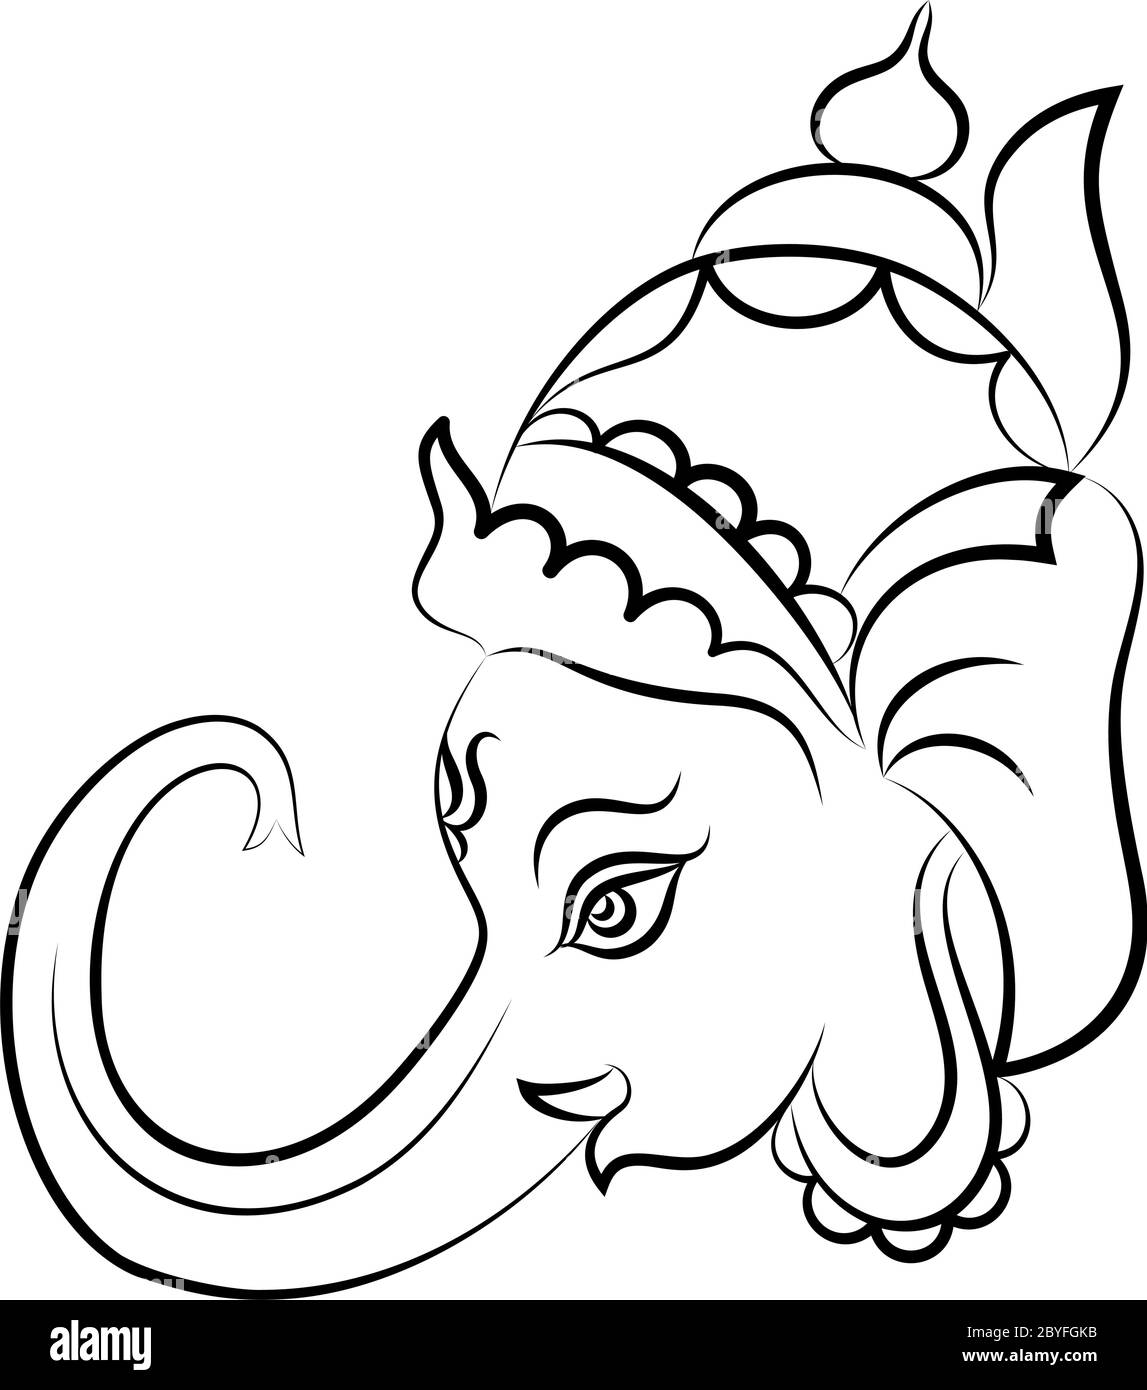 Ganesha The Lord Of Wisdom Vector Illustration Stock Vector